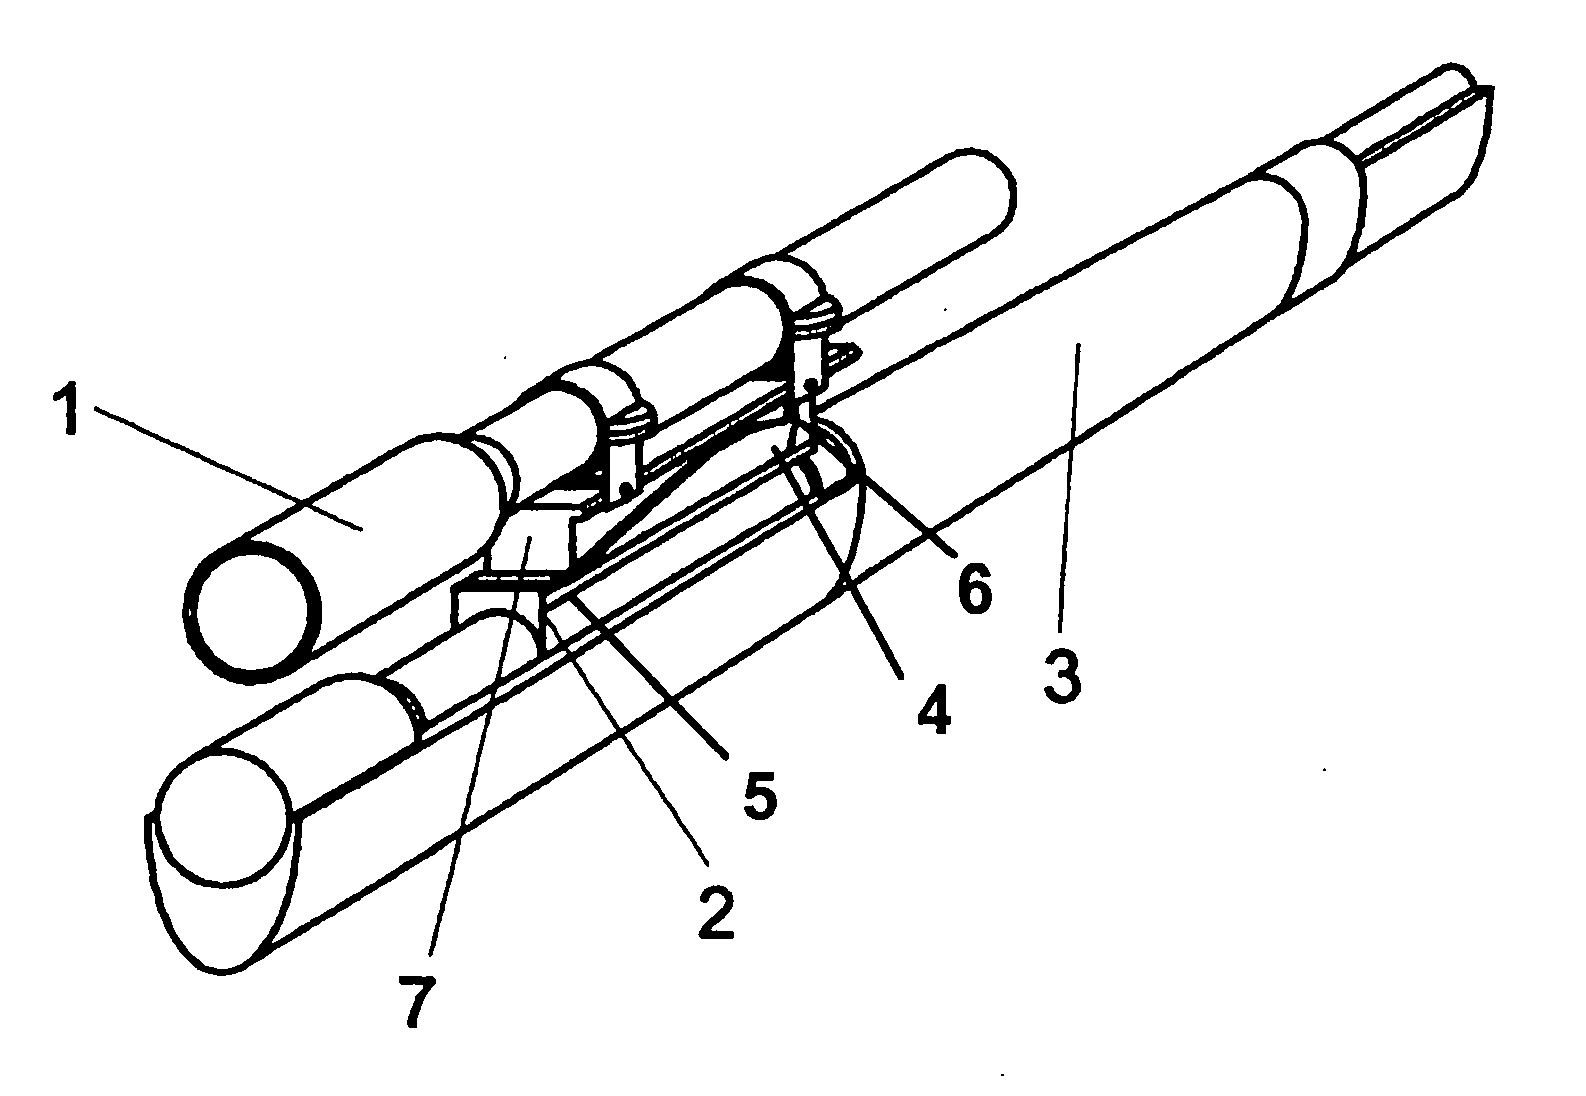 No-drill rear sight scope mount base